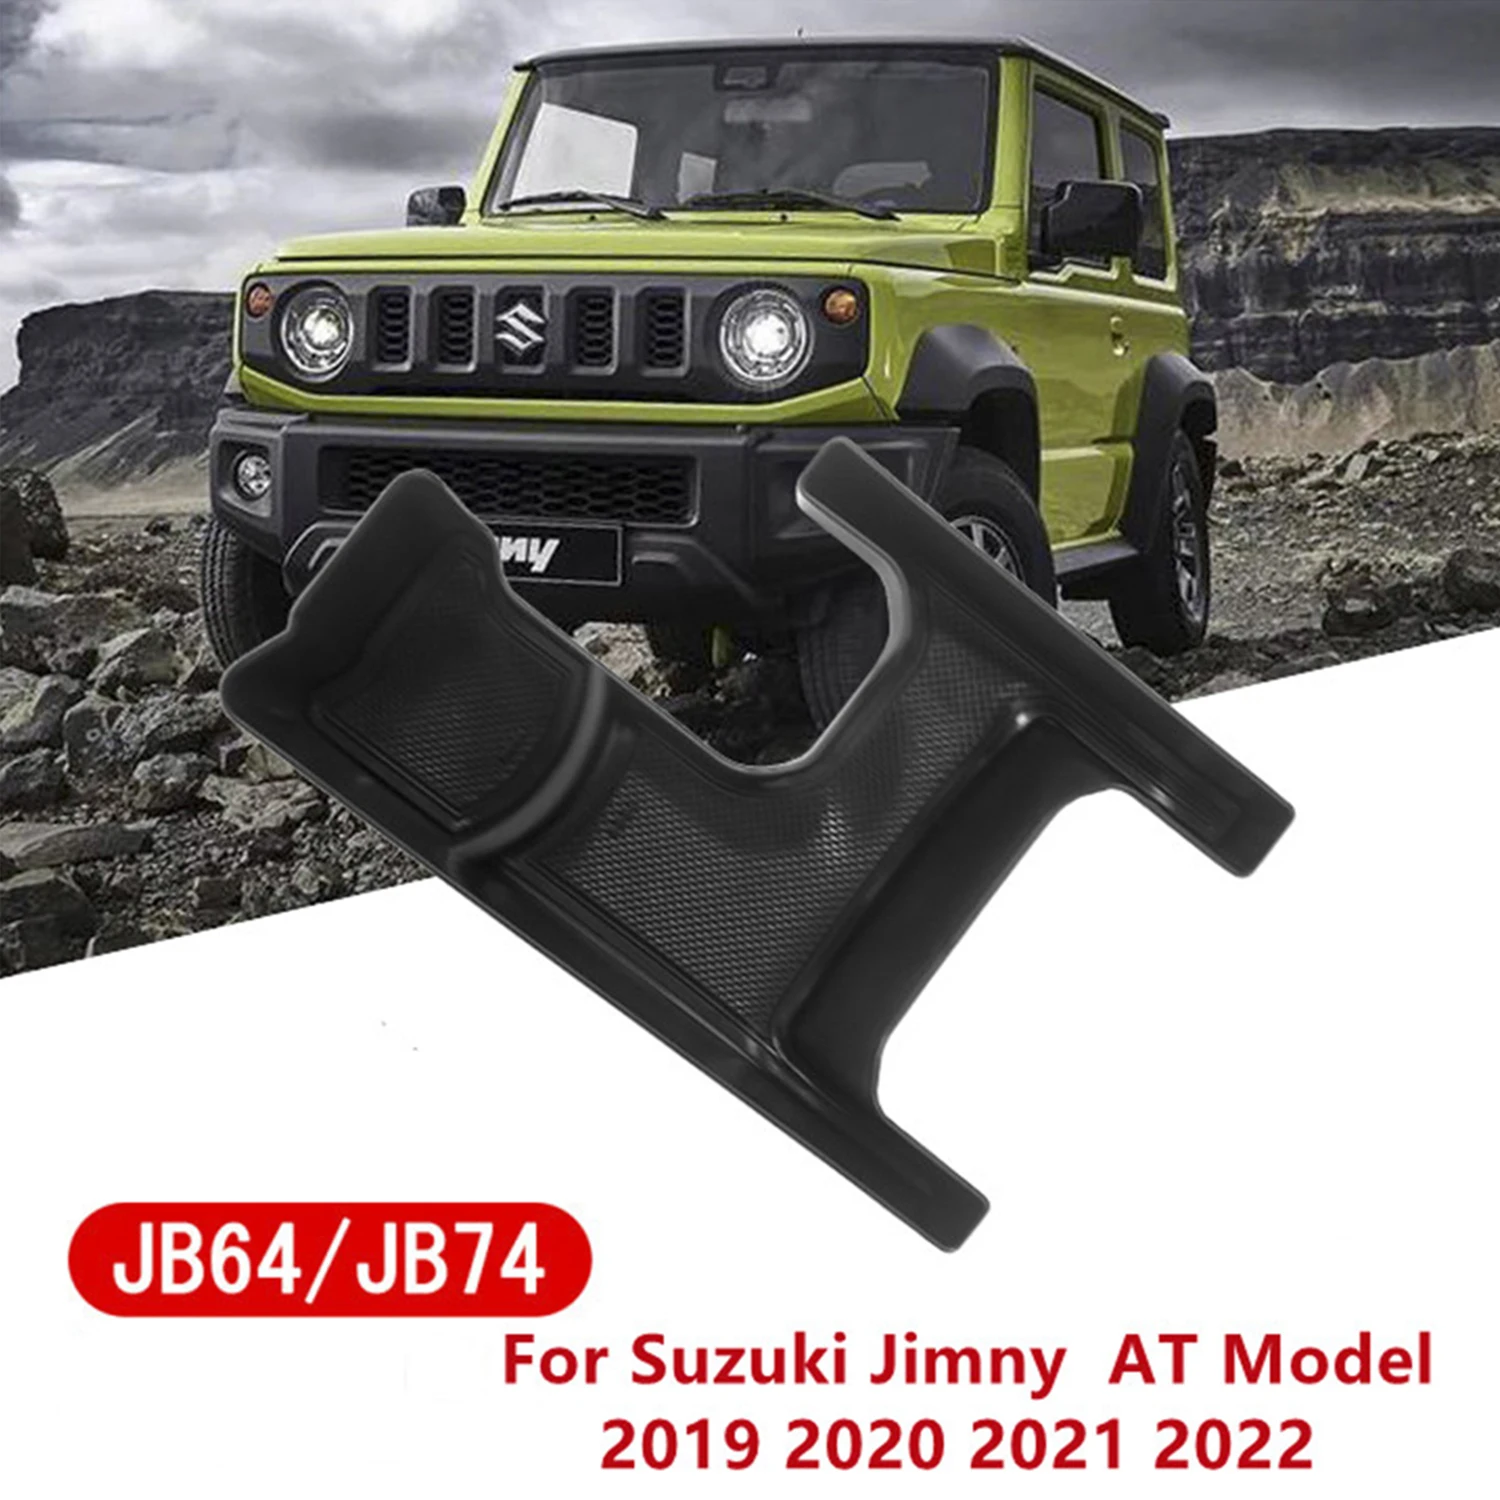 https://ae01.alicdn.com/kf/Sabc17bf07a7e4f559922c70a68a637beh/Car-Center-Console-Cup-Holder-Gear-Shift-Storage-Box-for-Suzuki-Jimny-JB64-JB74-AT-Model.jpg